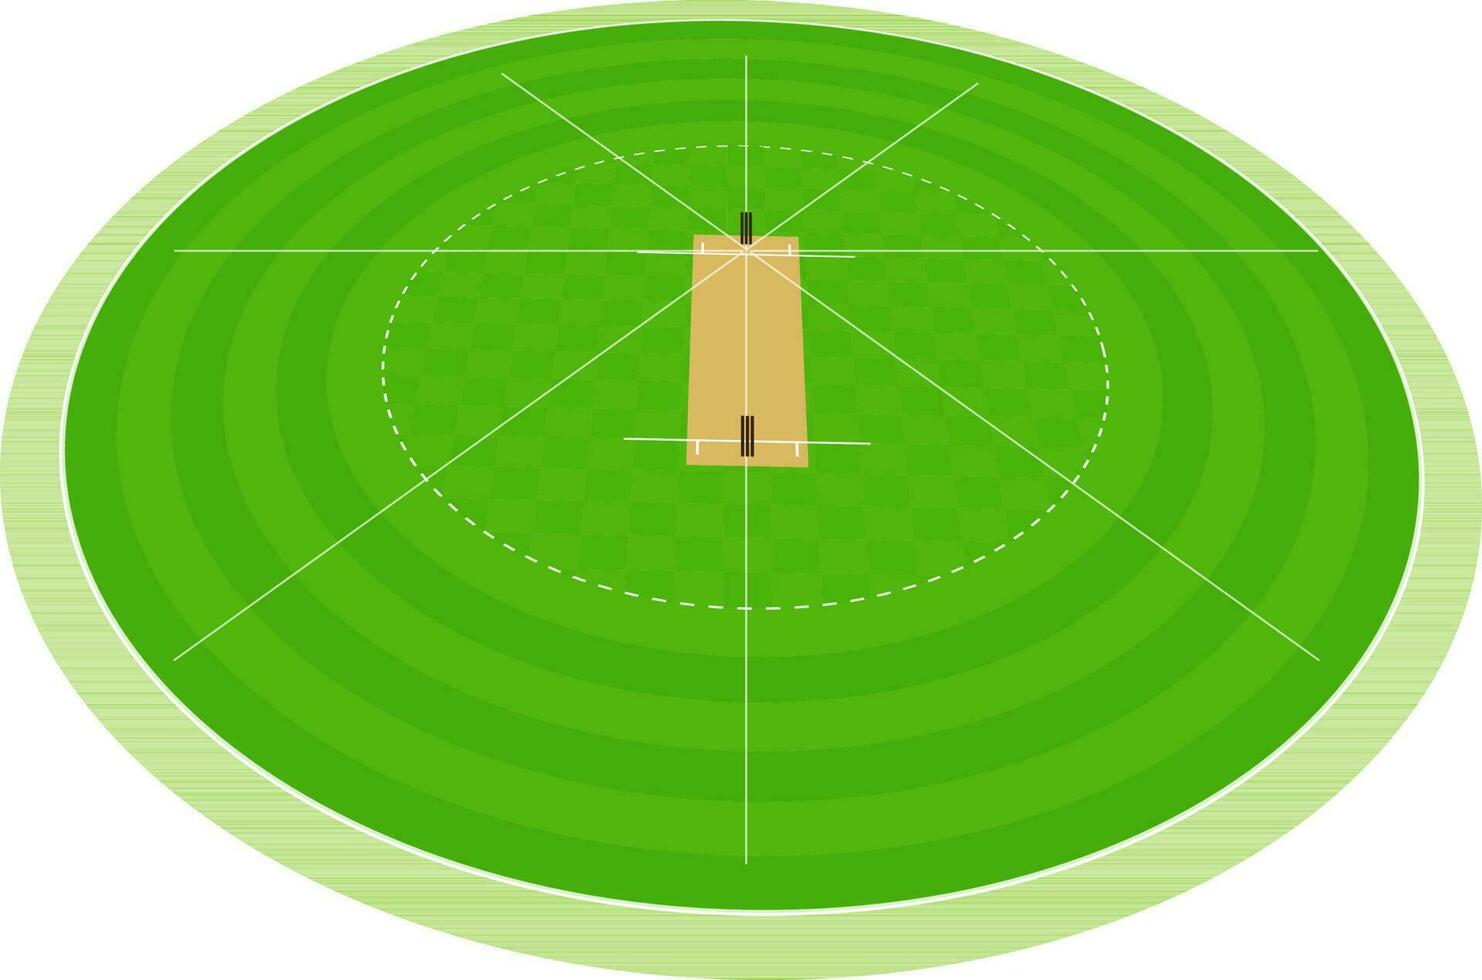 Cricket stadium with statistics. vector